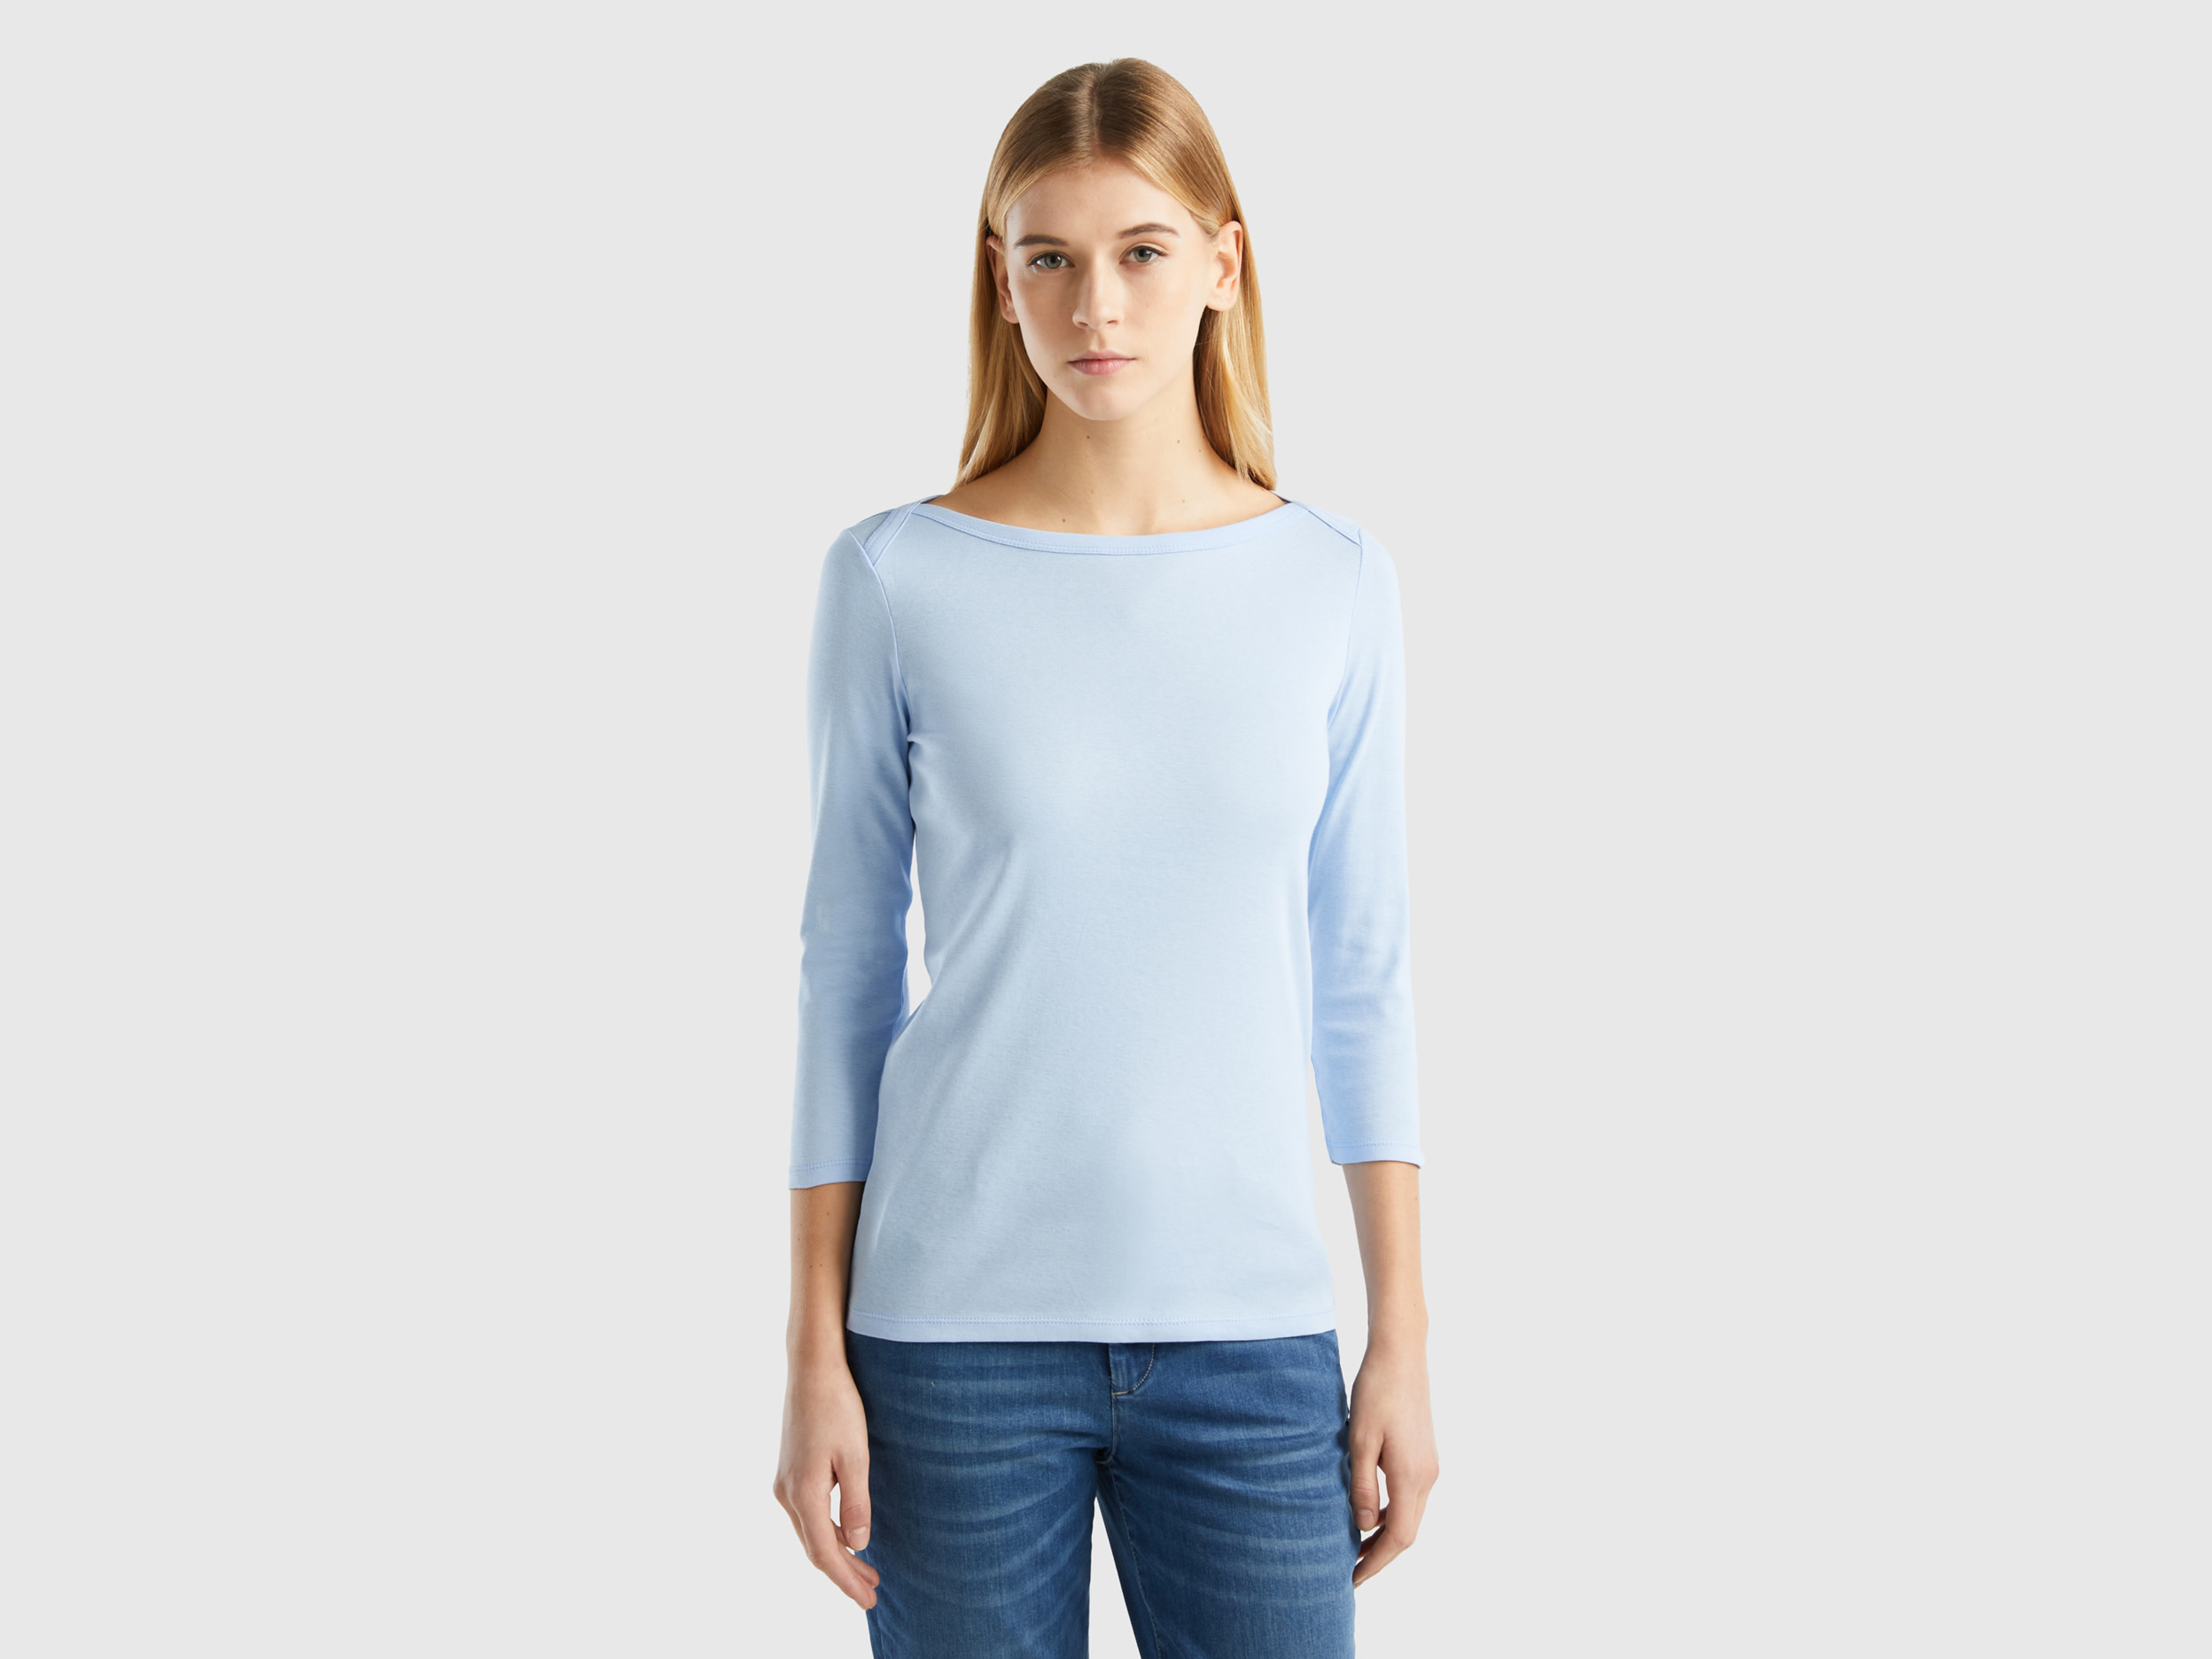 Benetton, T-shirt With Boat Neck In 100% Cotton, size XXS, Sky Blue, Women